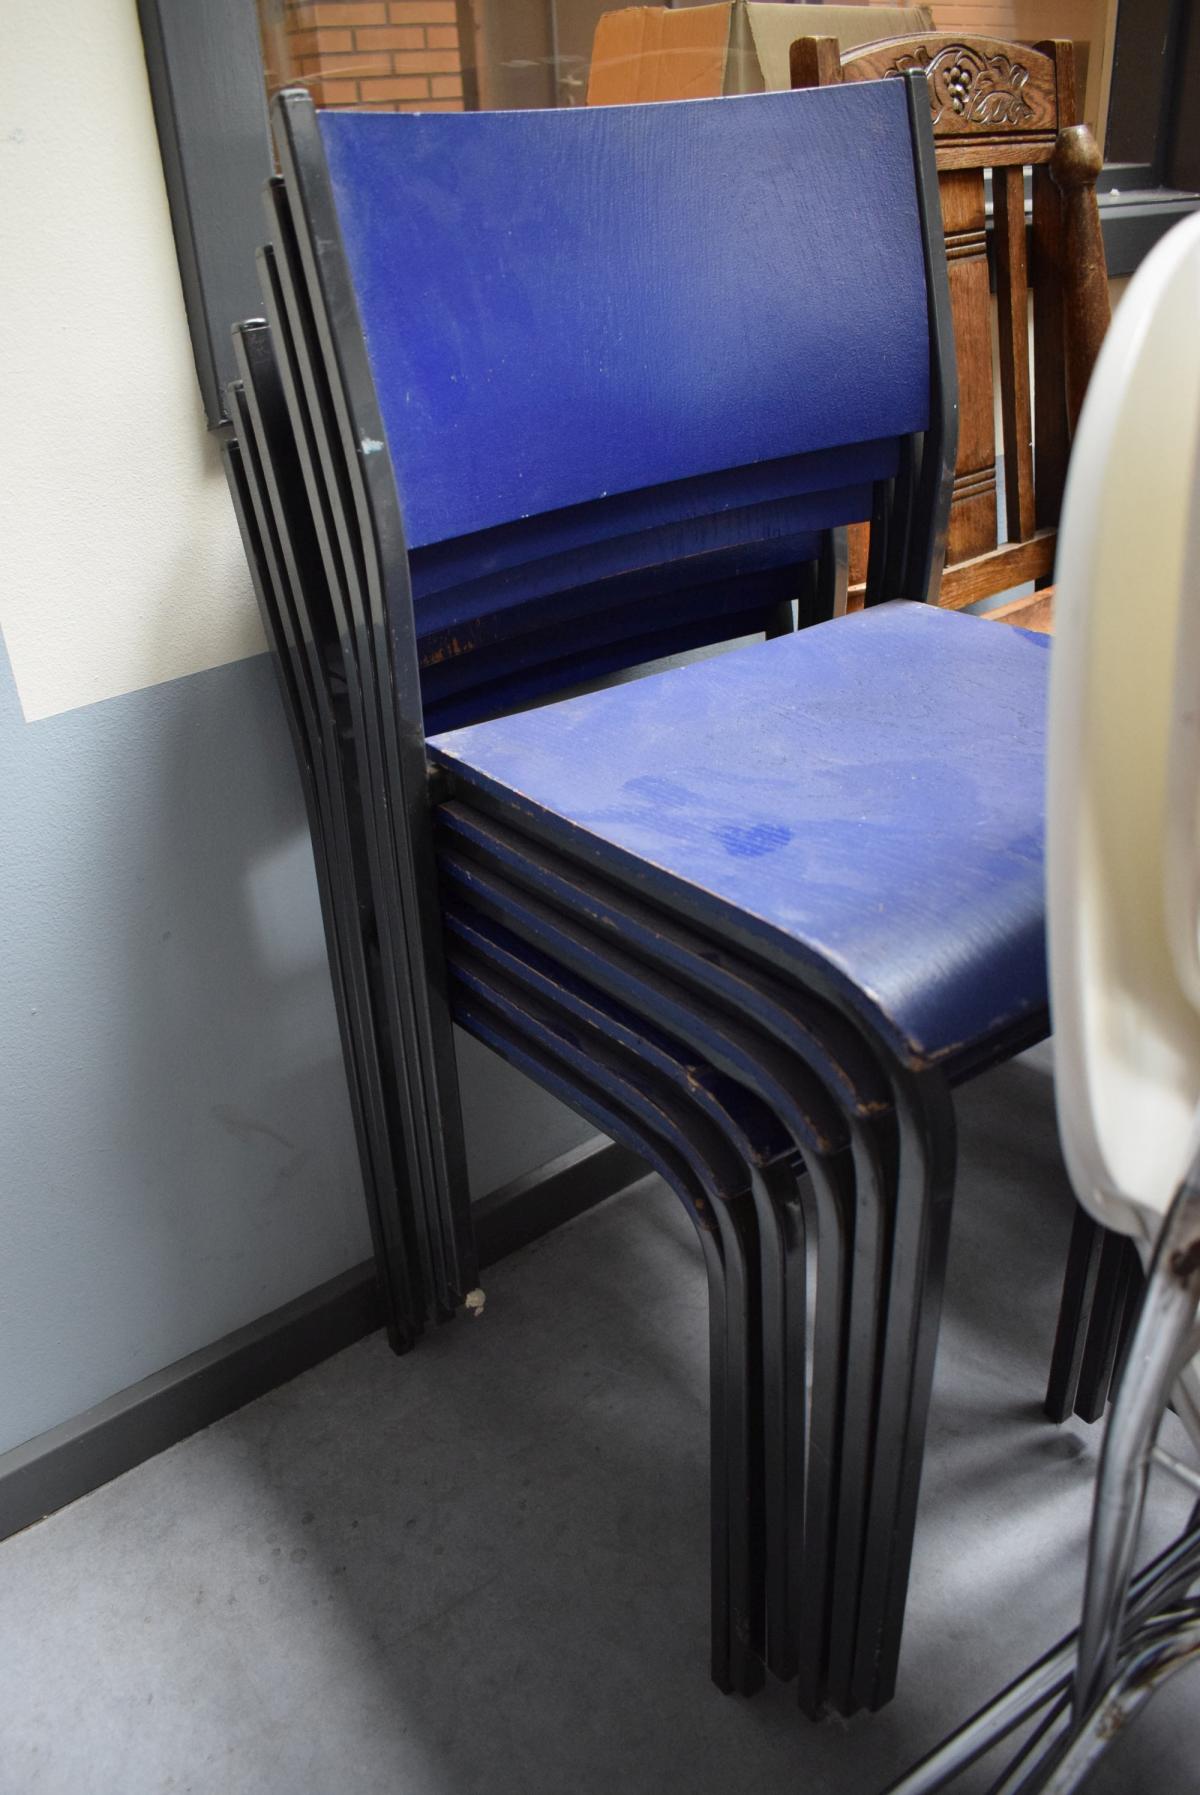 4 Stk Blaue Stuhle 3 Tlg Stuhle Weiss 2 Stuhle Aus Braunem Leder 3 Stk Weissen Plastikstuhle Kj Auktion Maschinen Auktionen